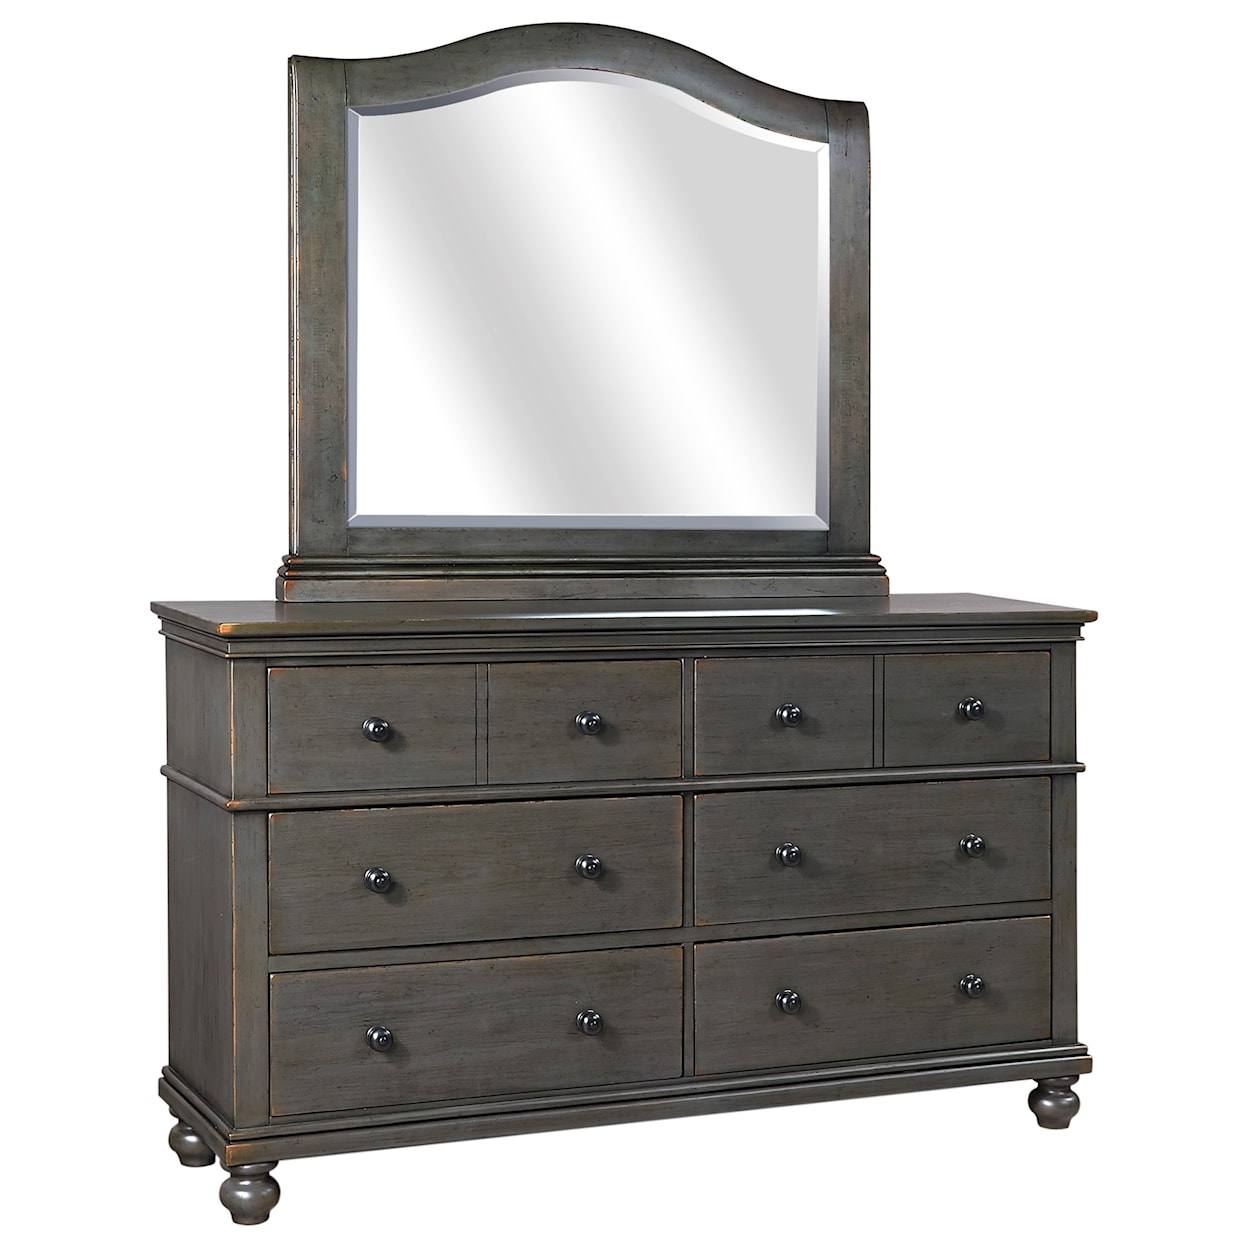 Aspenhome Oxford Dresser with Mirror